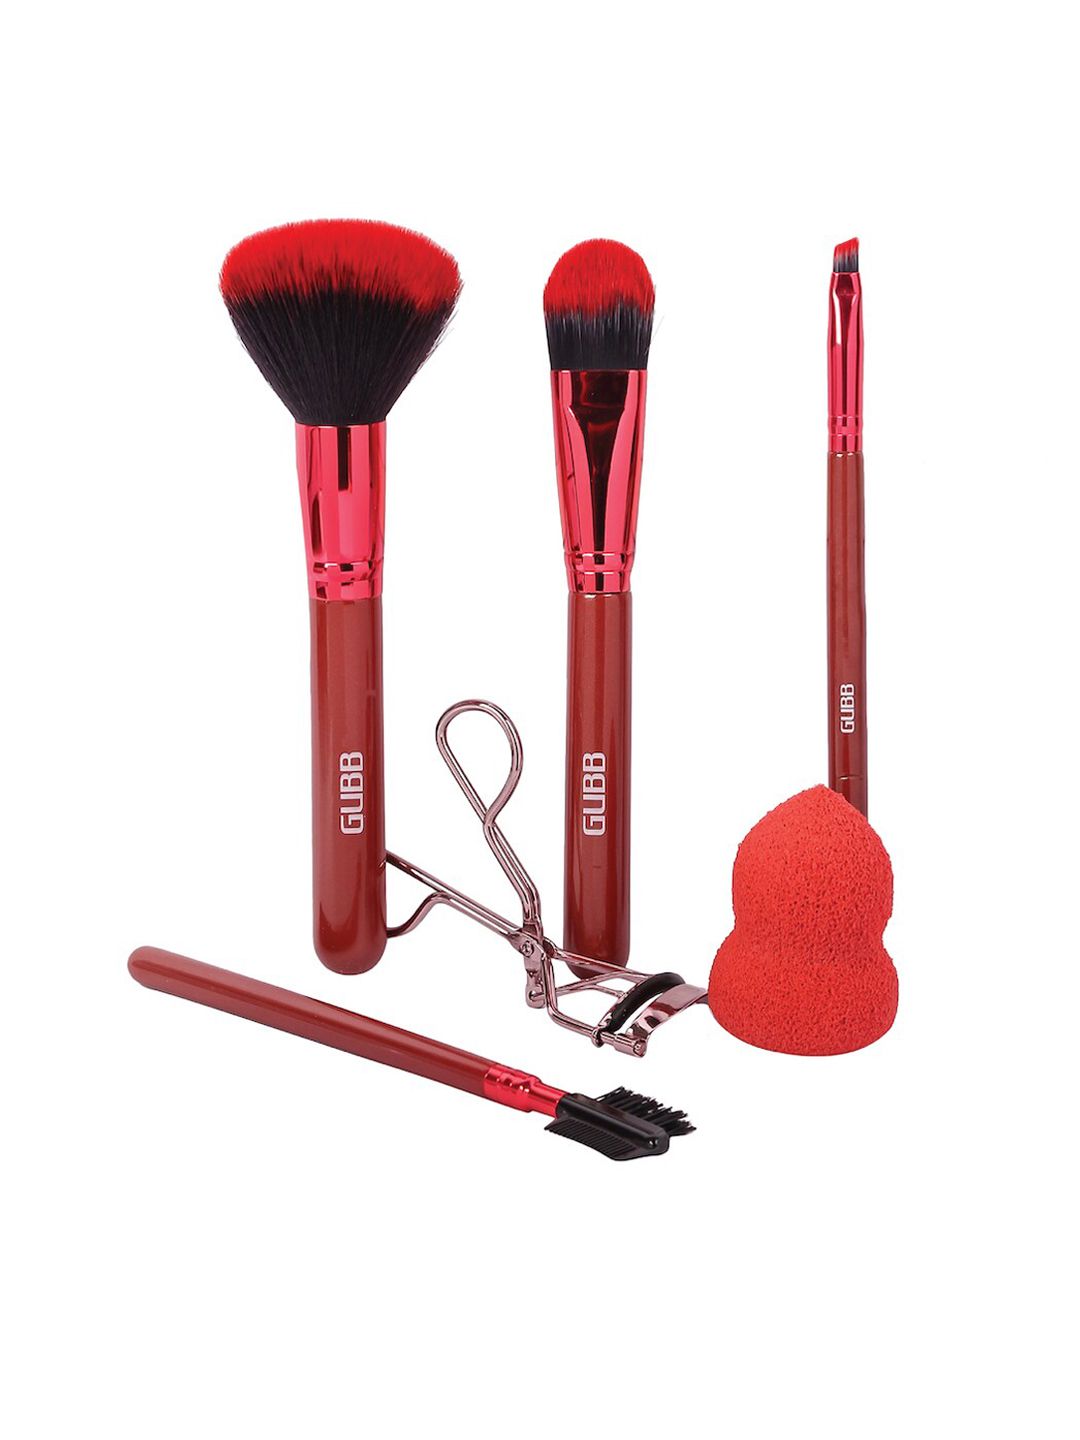 GUBB Pack of 4 Makeup Foundation & Powder Brush with Beauty Blender & Eyelash Curler Price in India